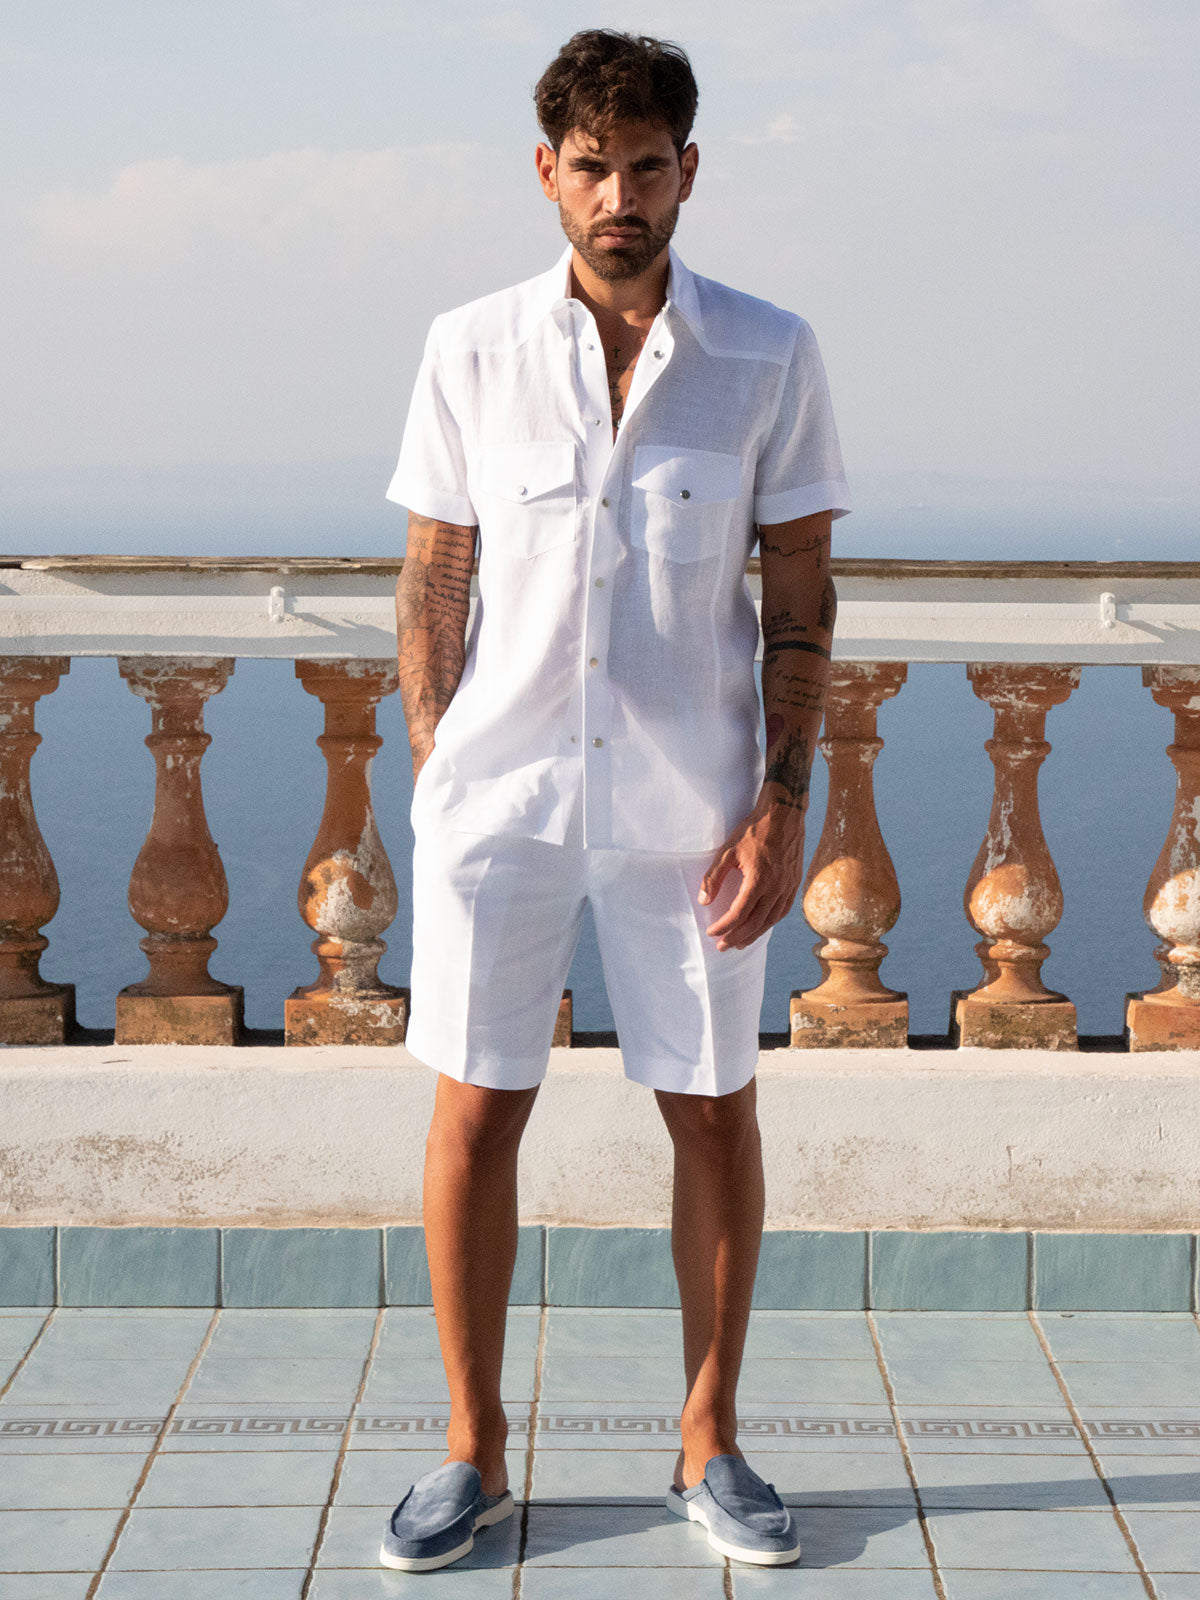 Bermuda Capri 100% Capri white linen pant worn by model